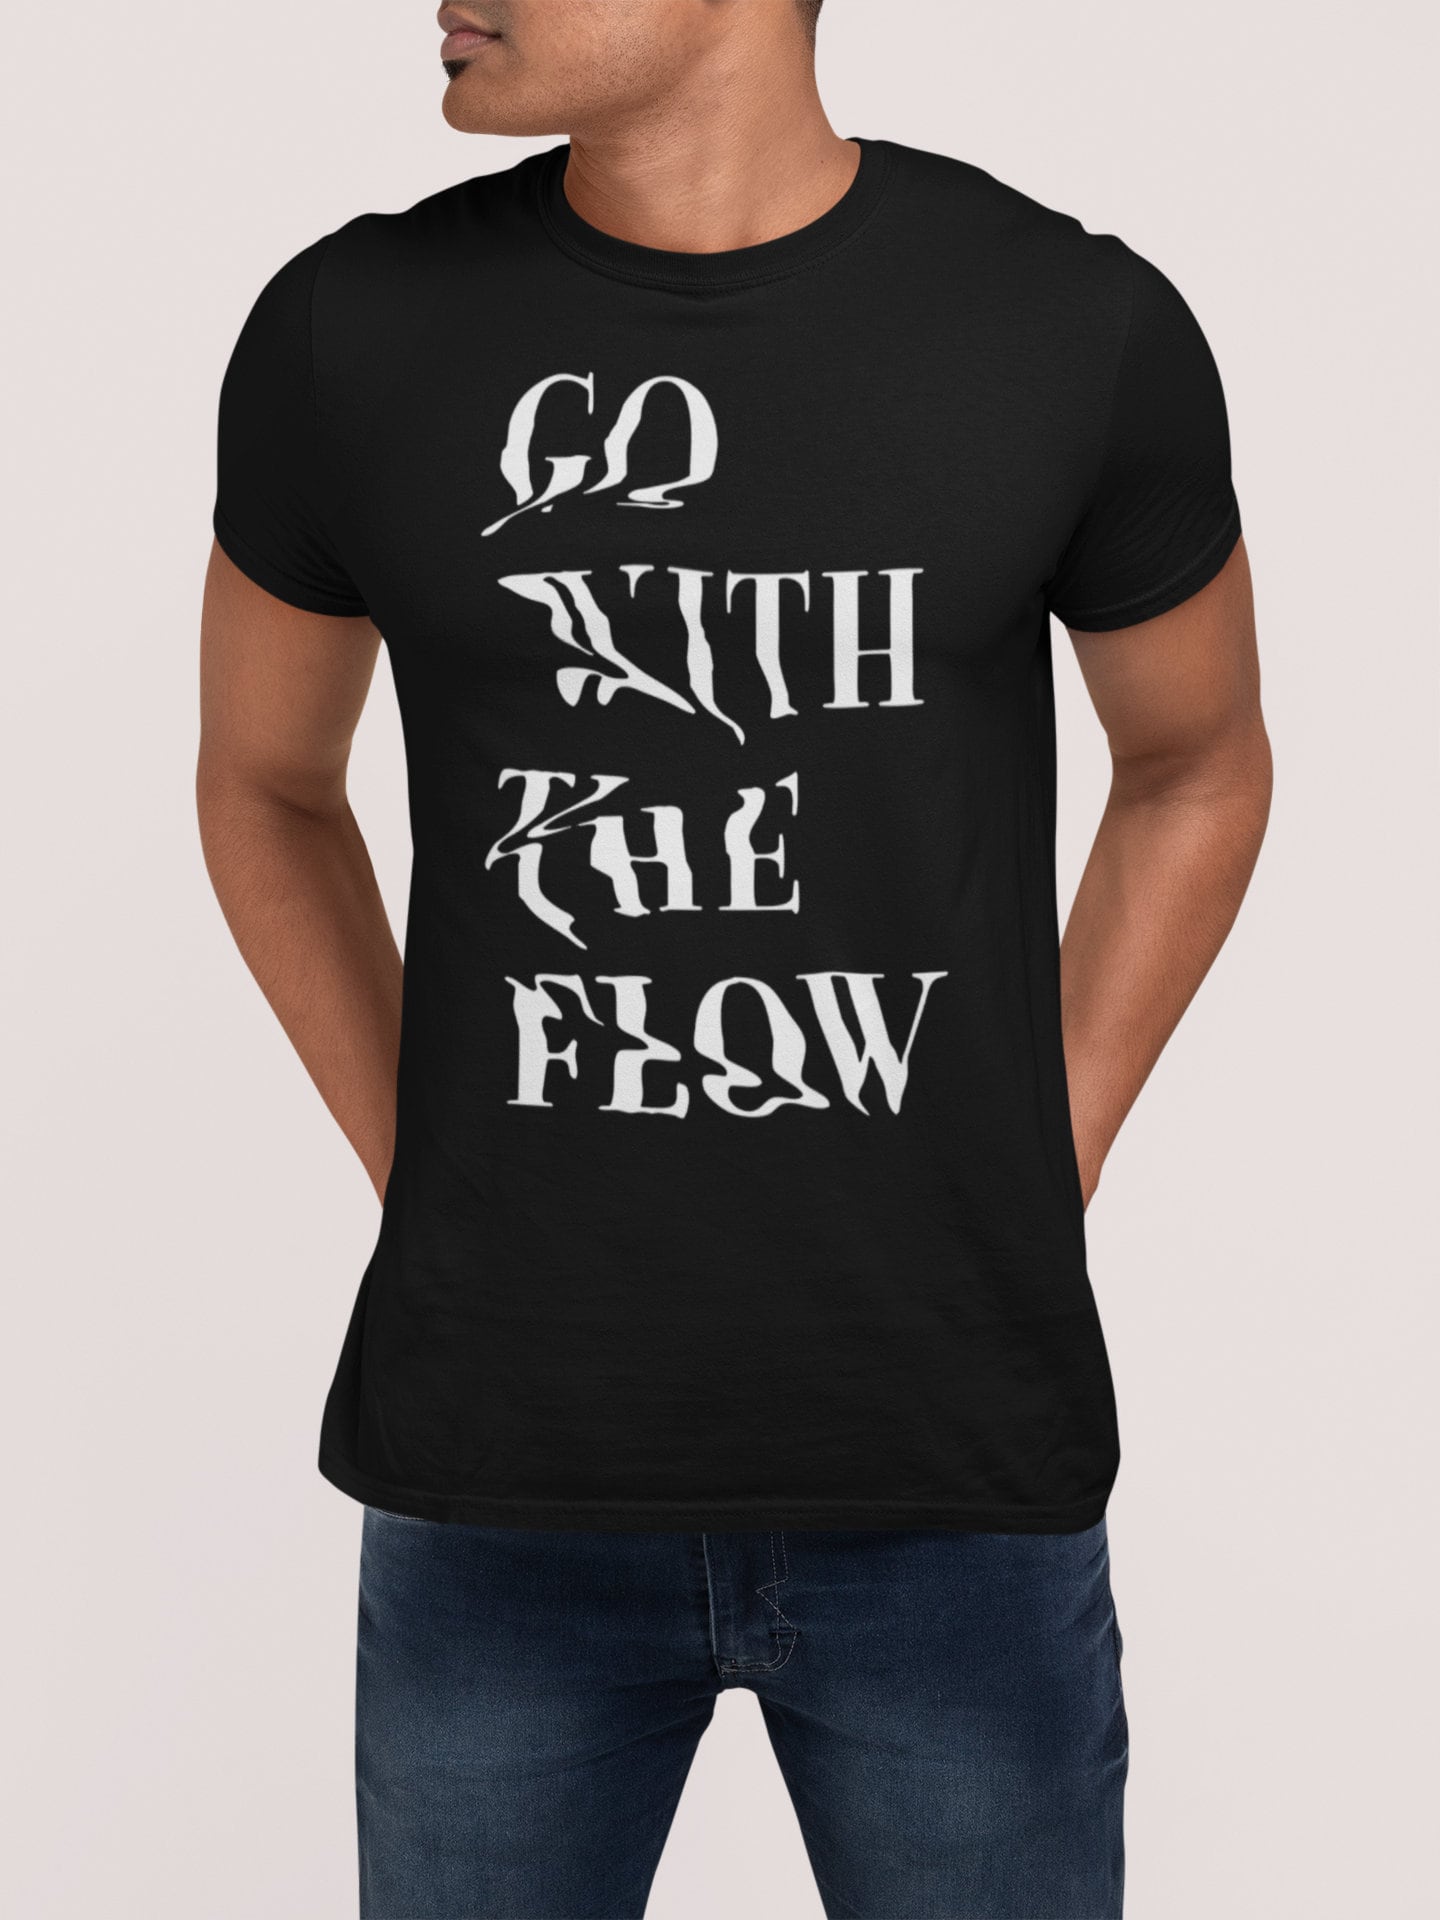 Go With The Flow Men's T-shirt, Mens Slogan Tees, Glitch Art T Shirt, Motto Mens TShirt, Humor T-Shirt, Original Illustration By Ali Gulec